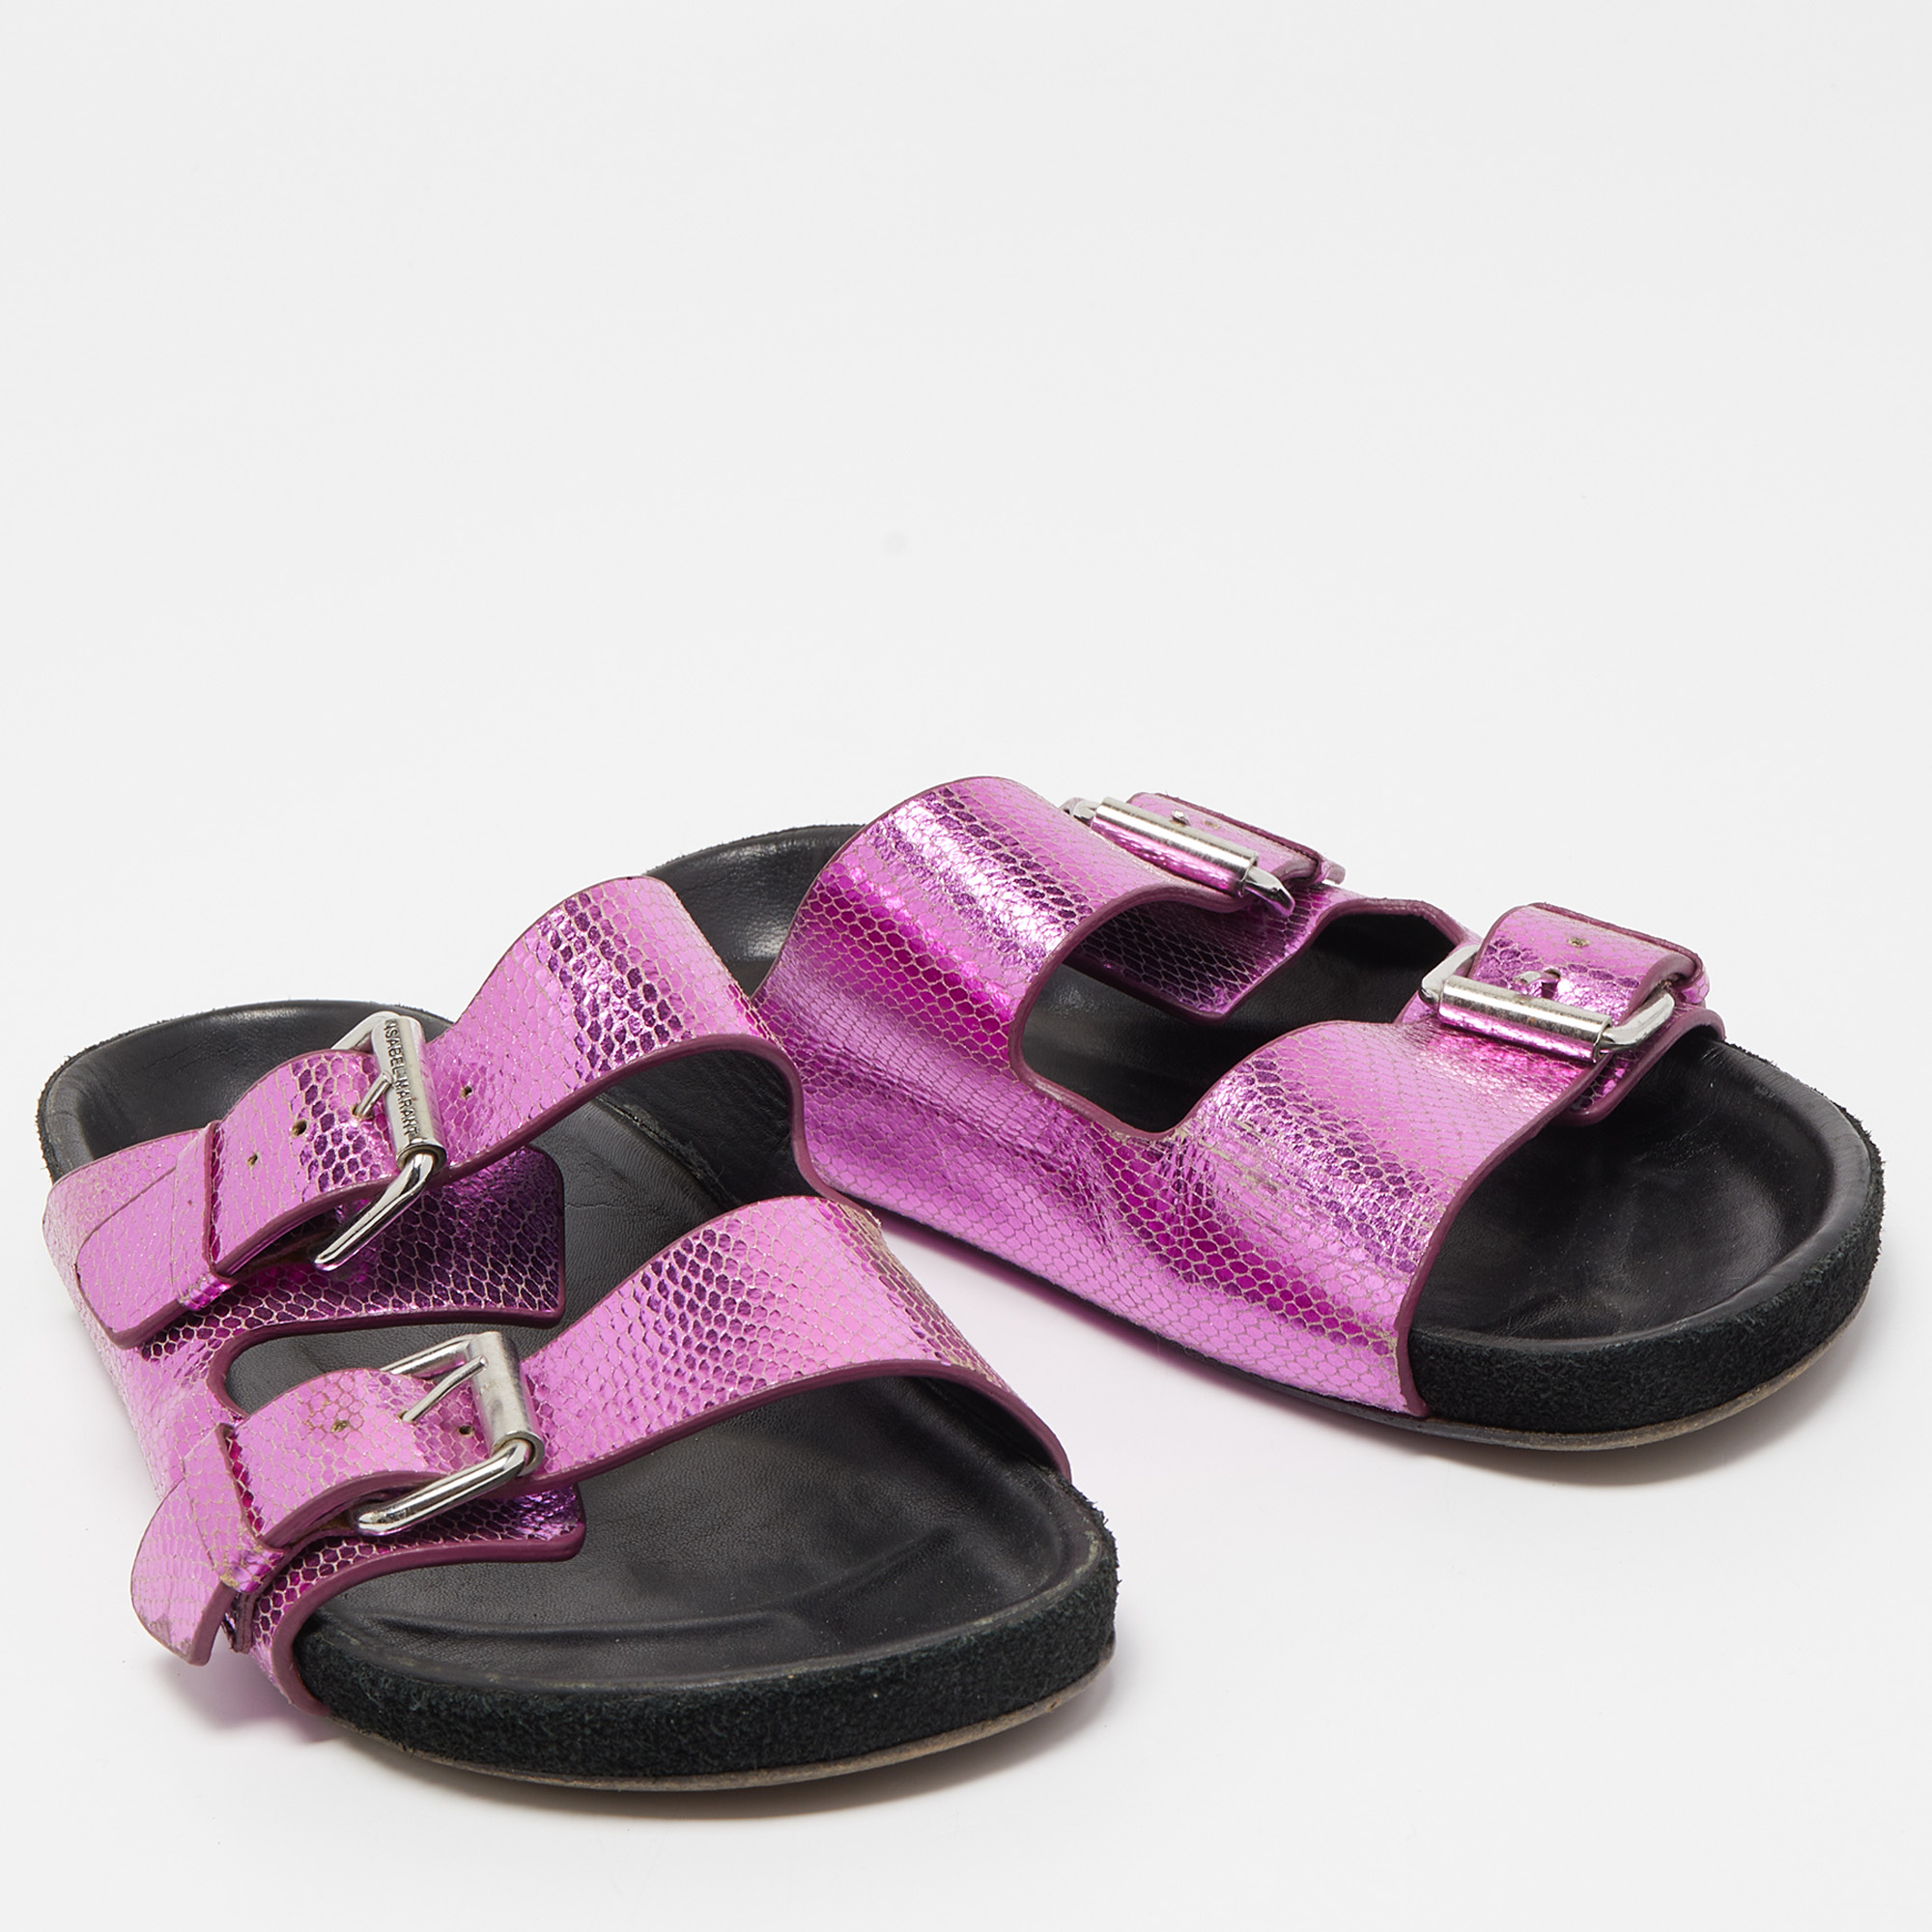 Isabel Marant Purple/Black Snakeskin Embossed Leather Buckle Detail Flat Sandals Size 36